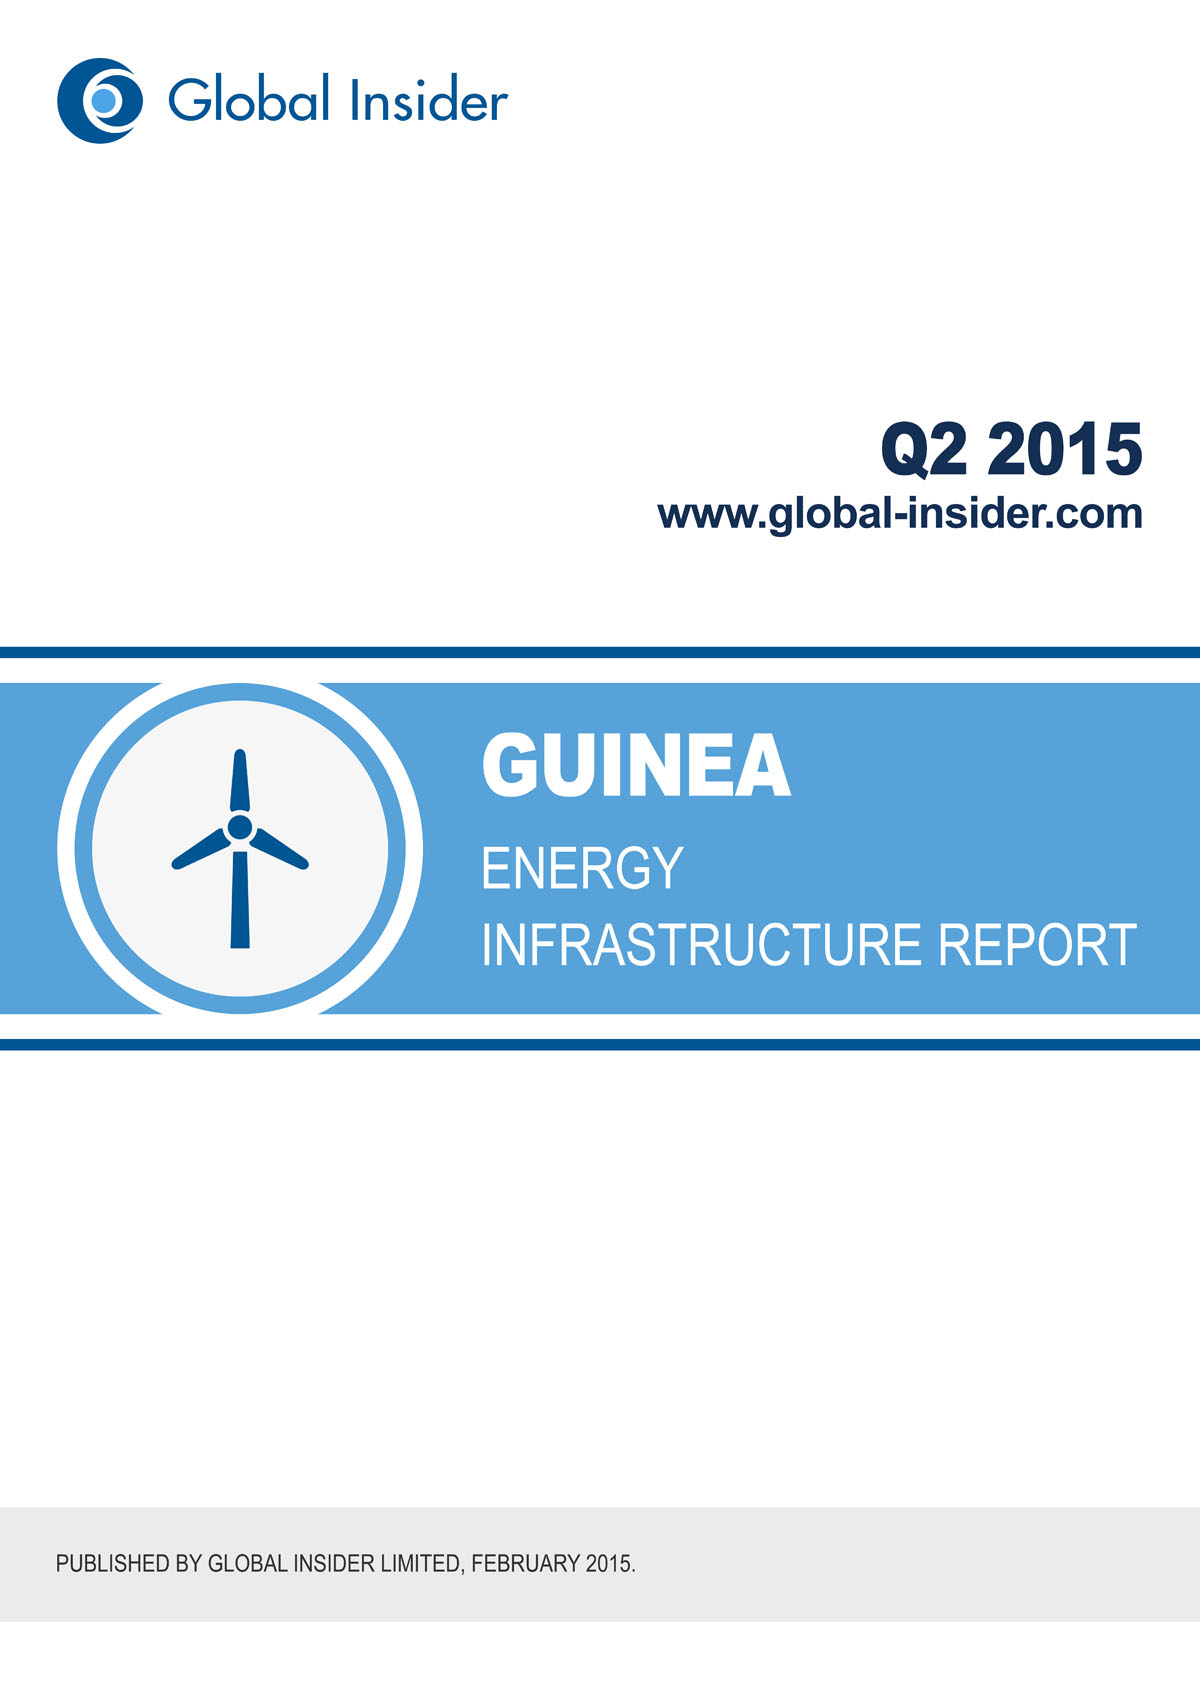 Guinea Energy Infrastructure Report